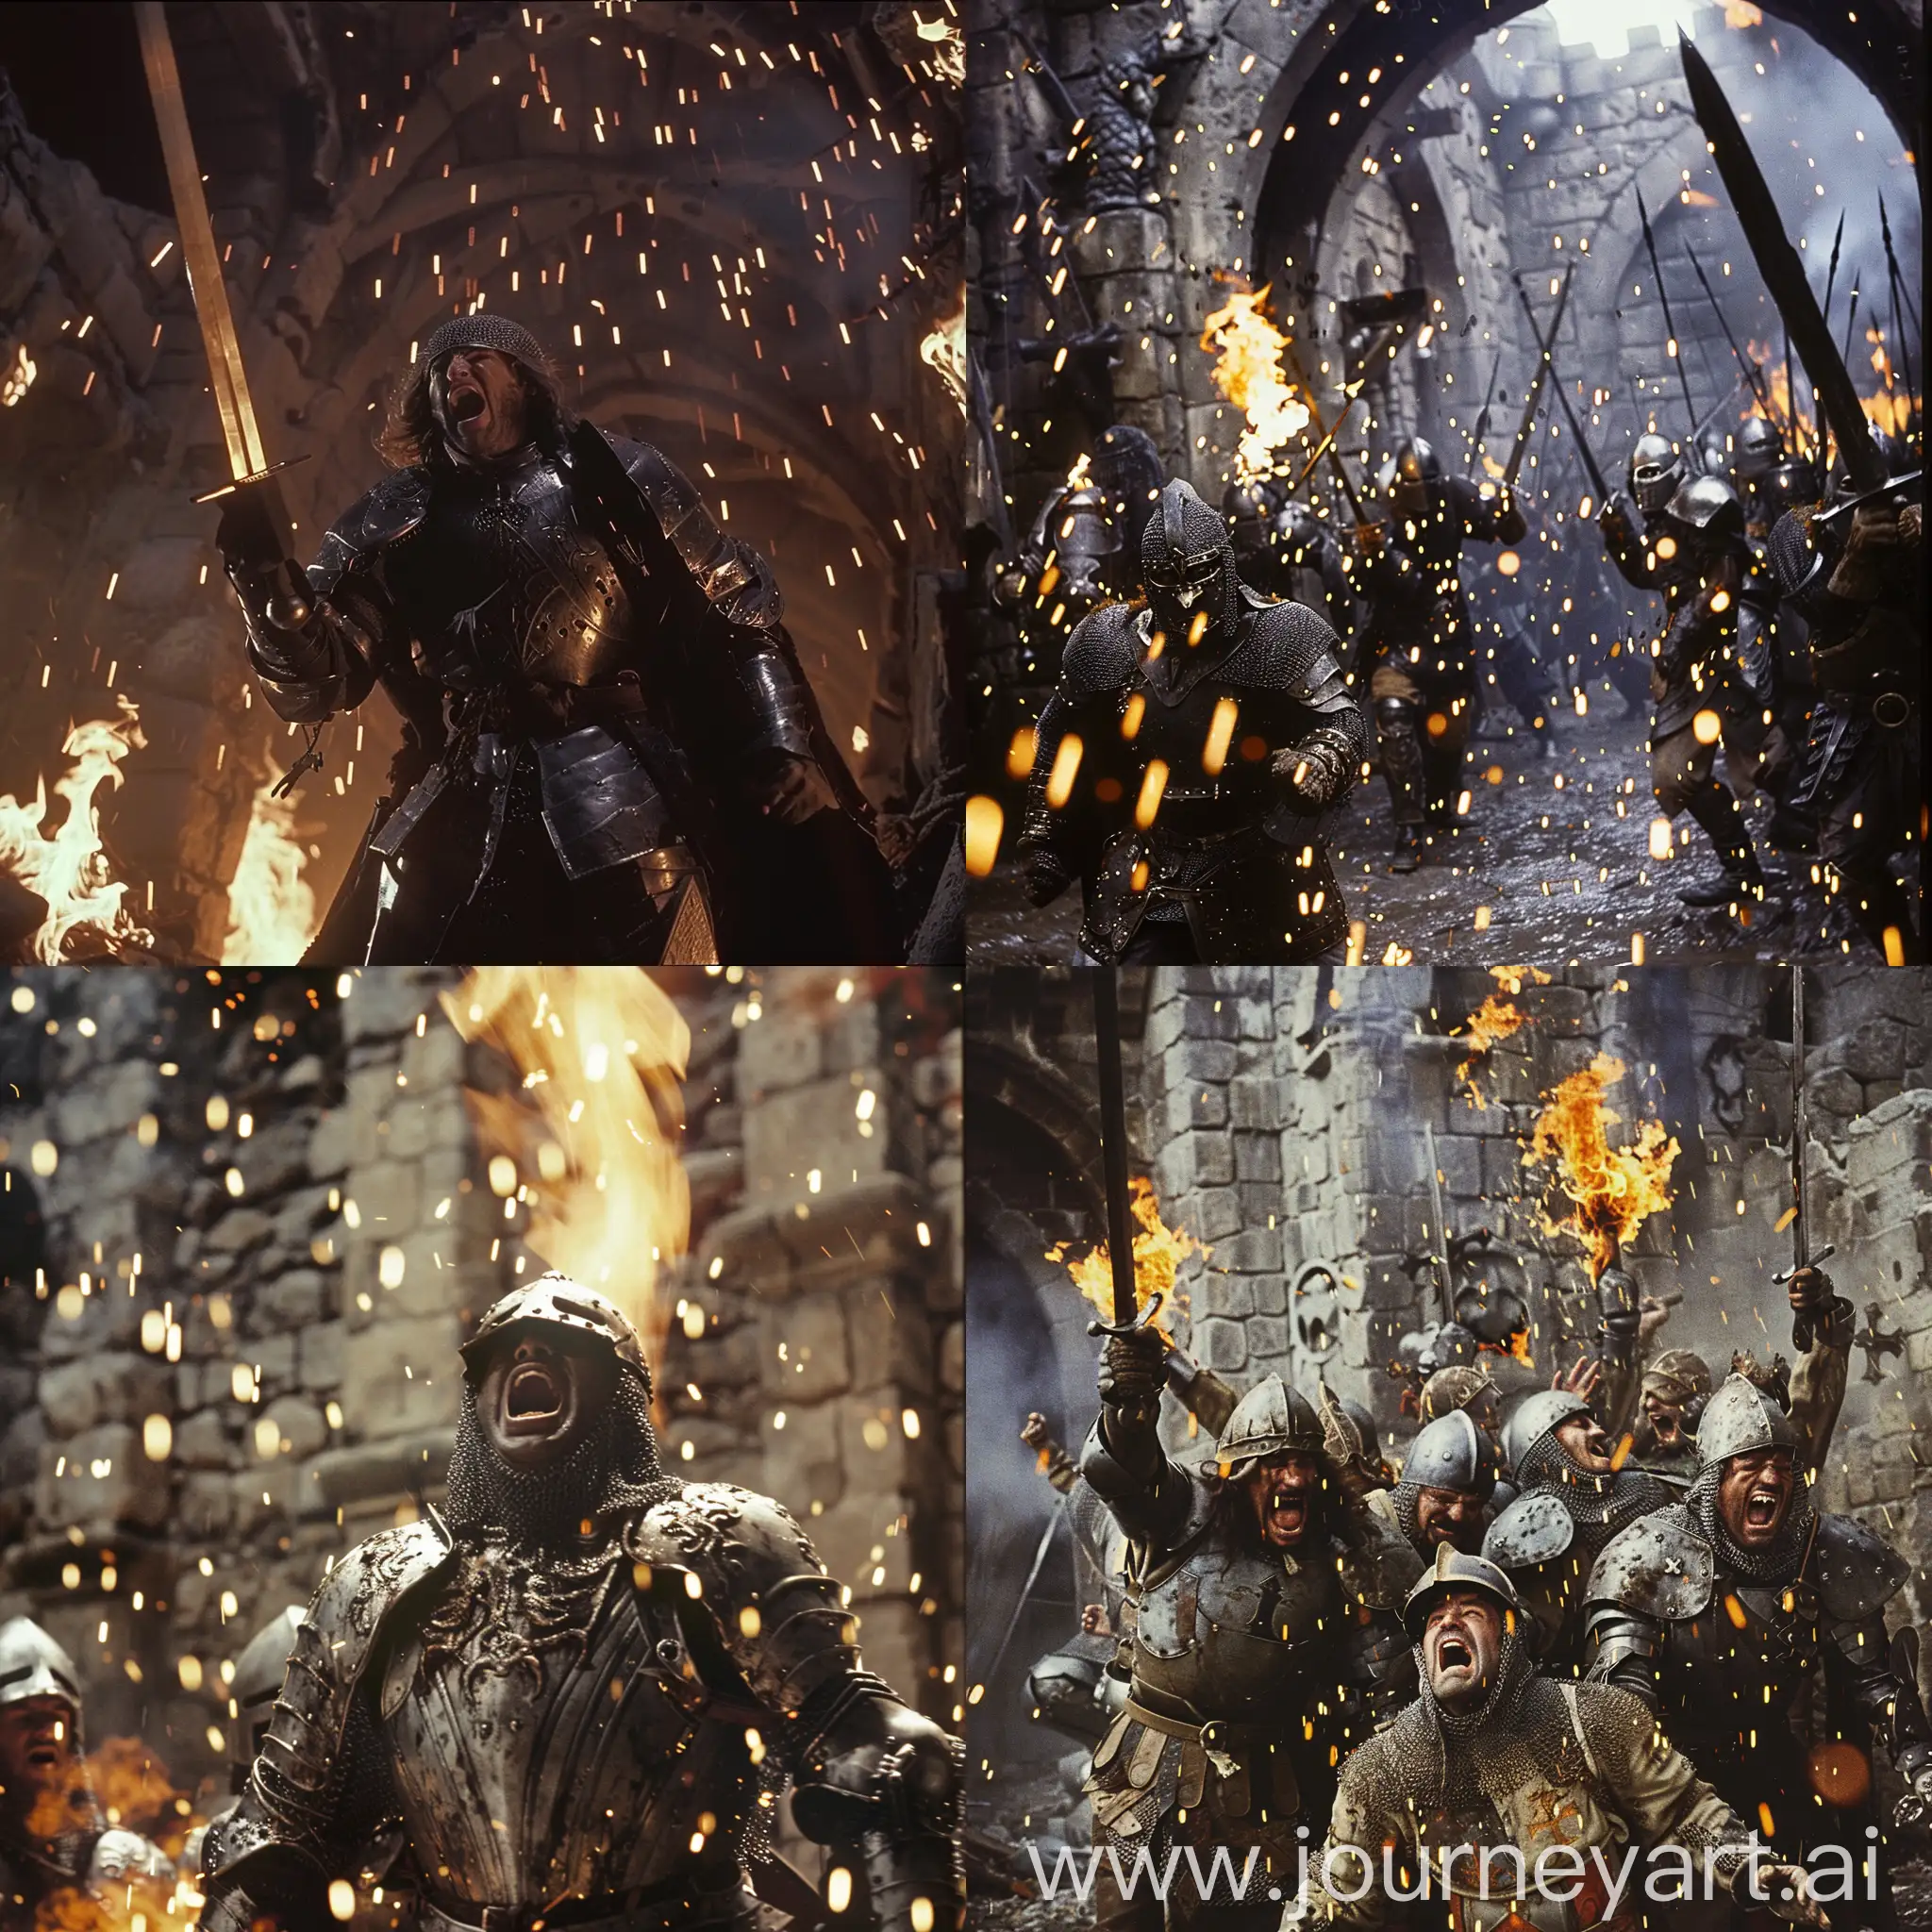 Medieval-Knights-in-Agonizing-Scream-Amidst-Fiery-Dungeons-1980-Dark-Fantasy-Art